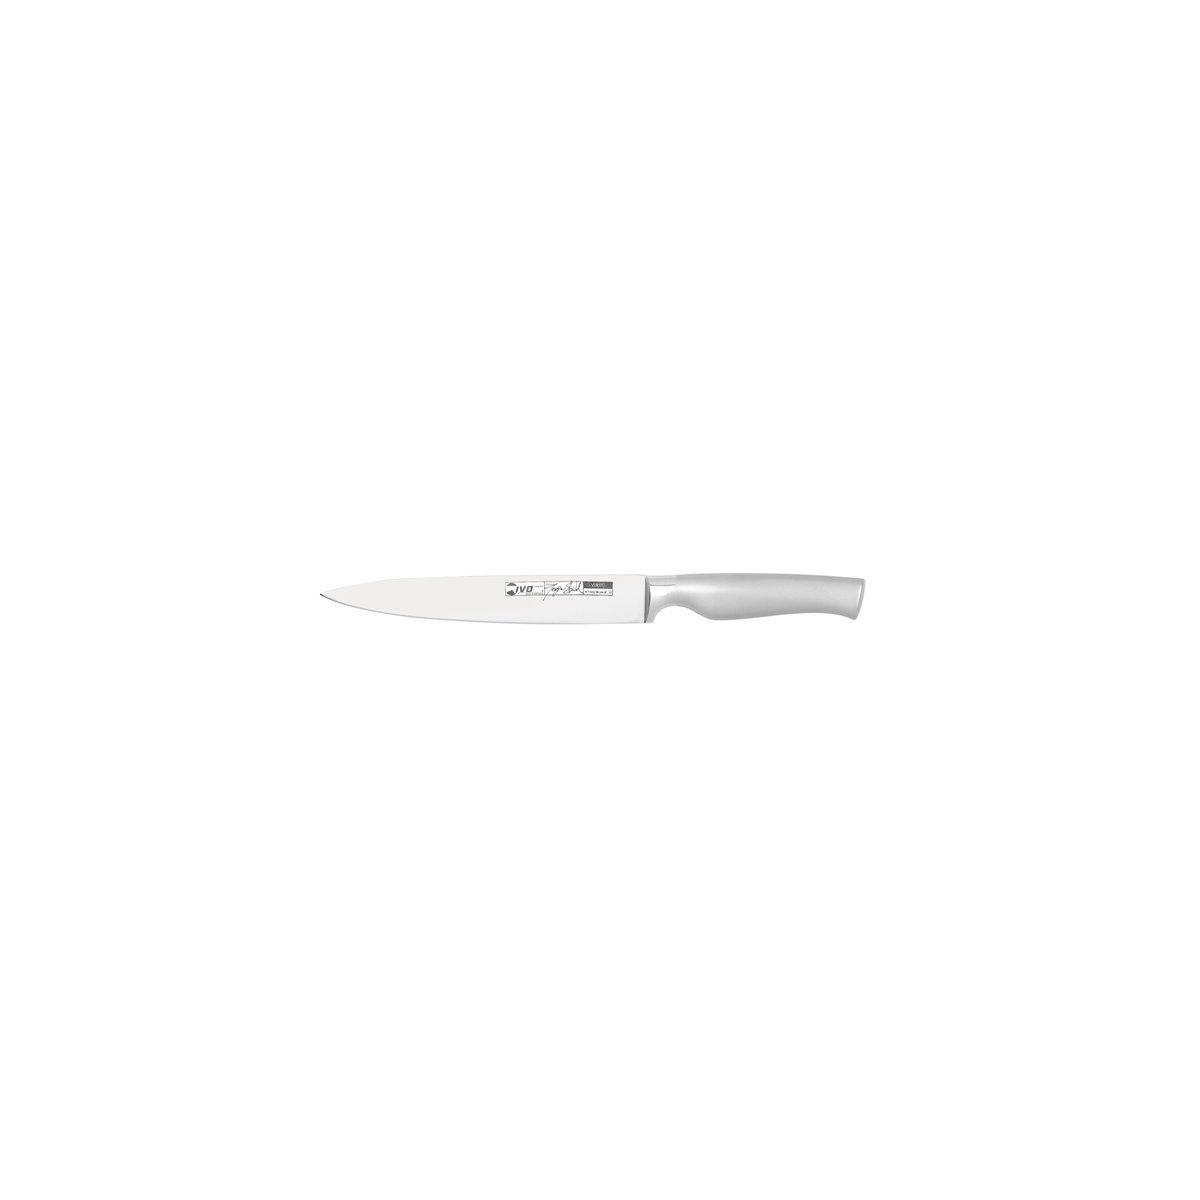 26056 Ivo Virtu Utility Knife 160mm Tomkin Australia Hospitality Supplies